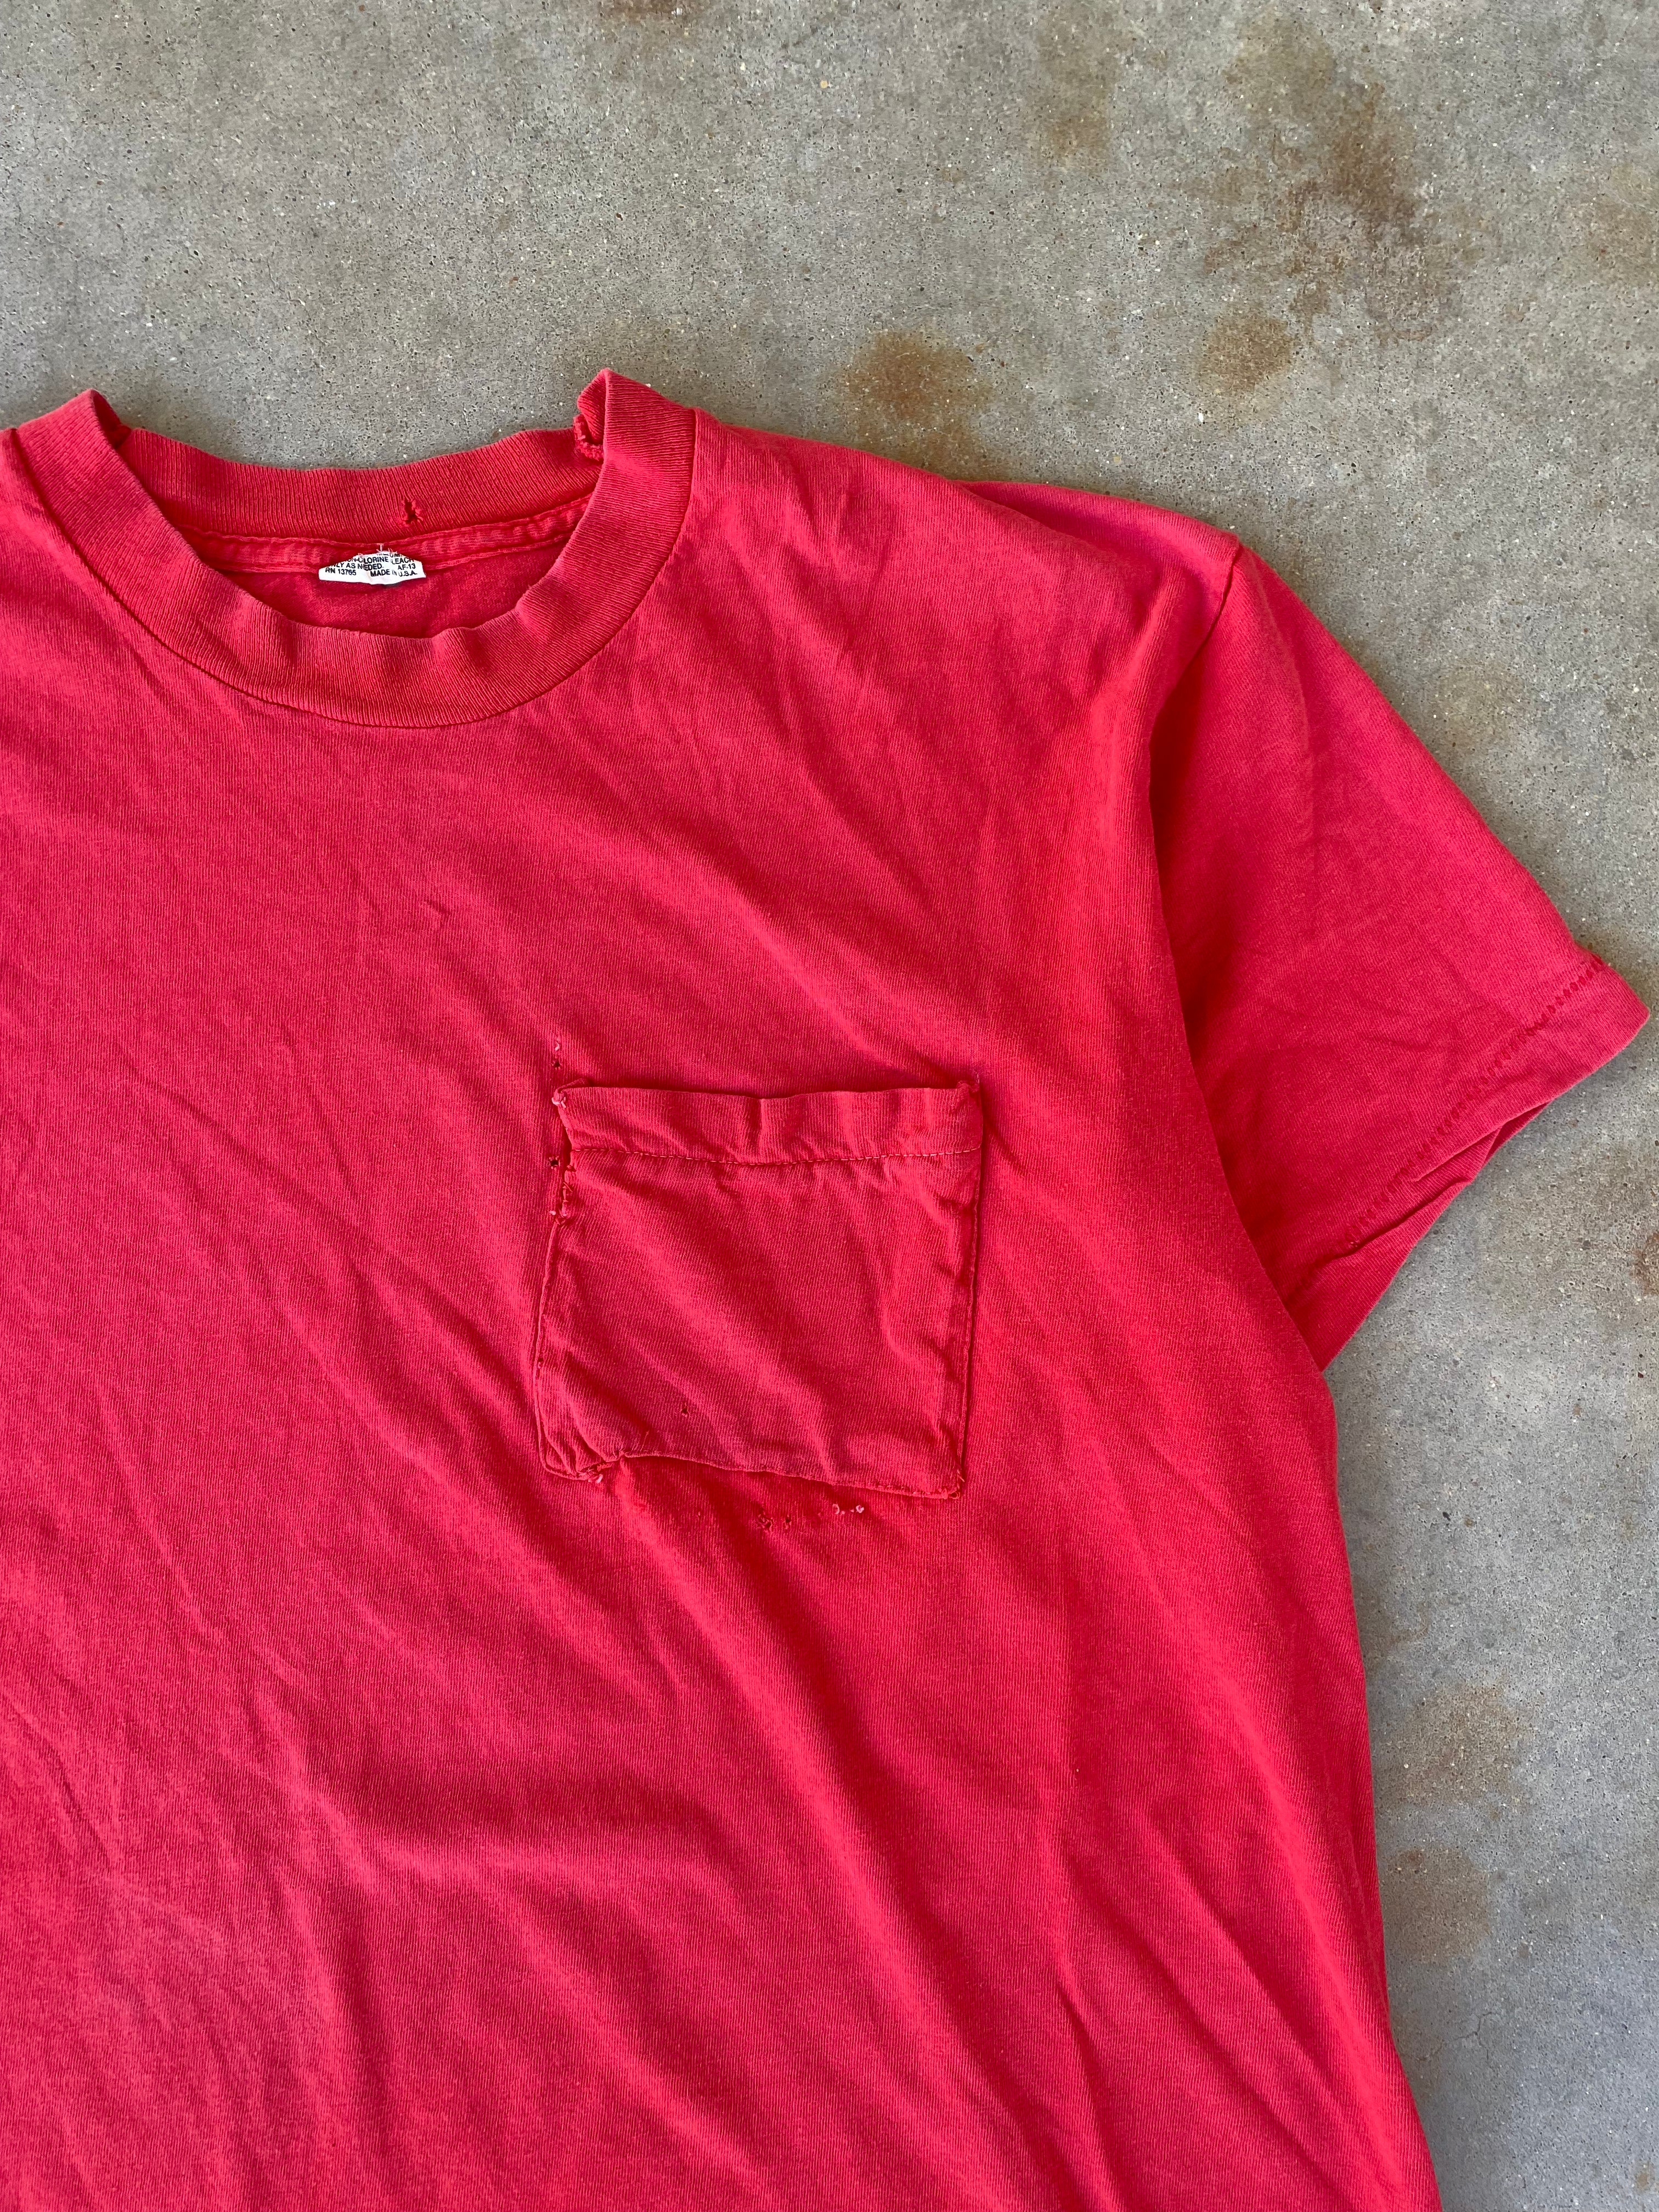 1980s Fruit of the Loom Selvedge Pocket T-Shirt (L)